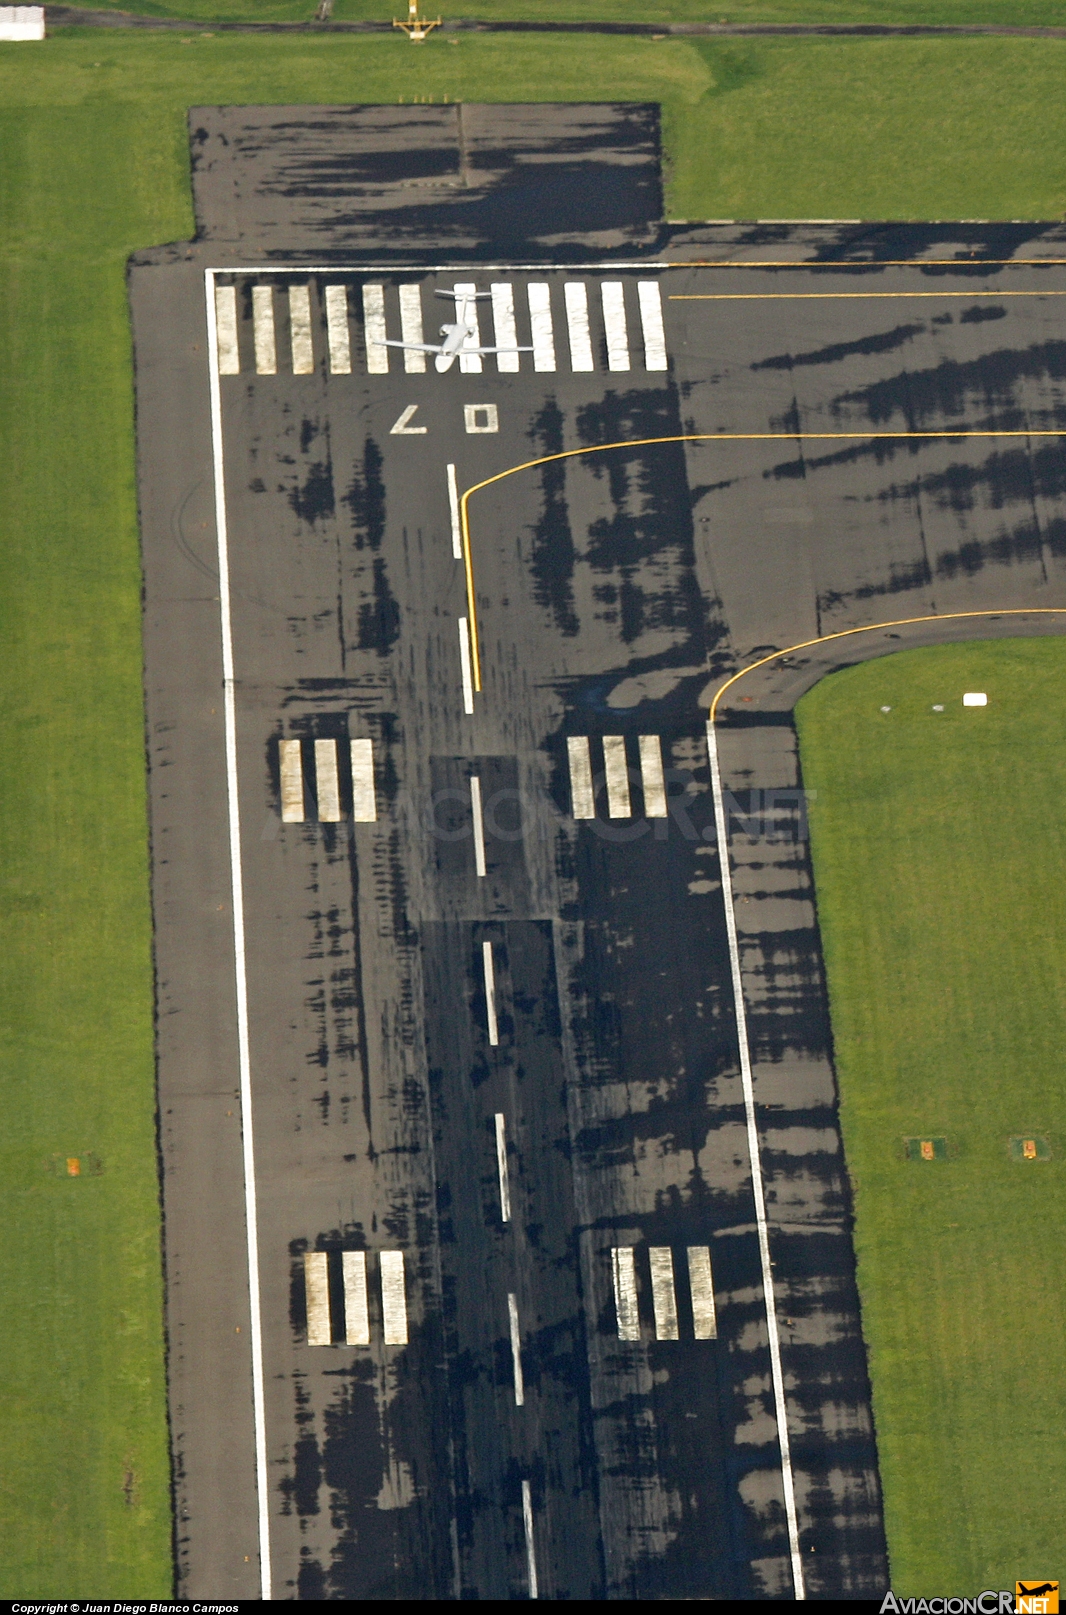 MROC - Aeropuerto - Pista de aterrizaje